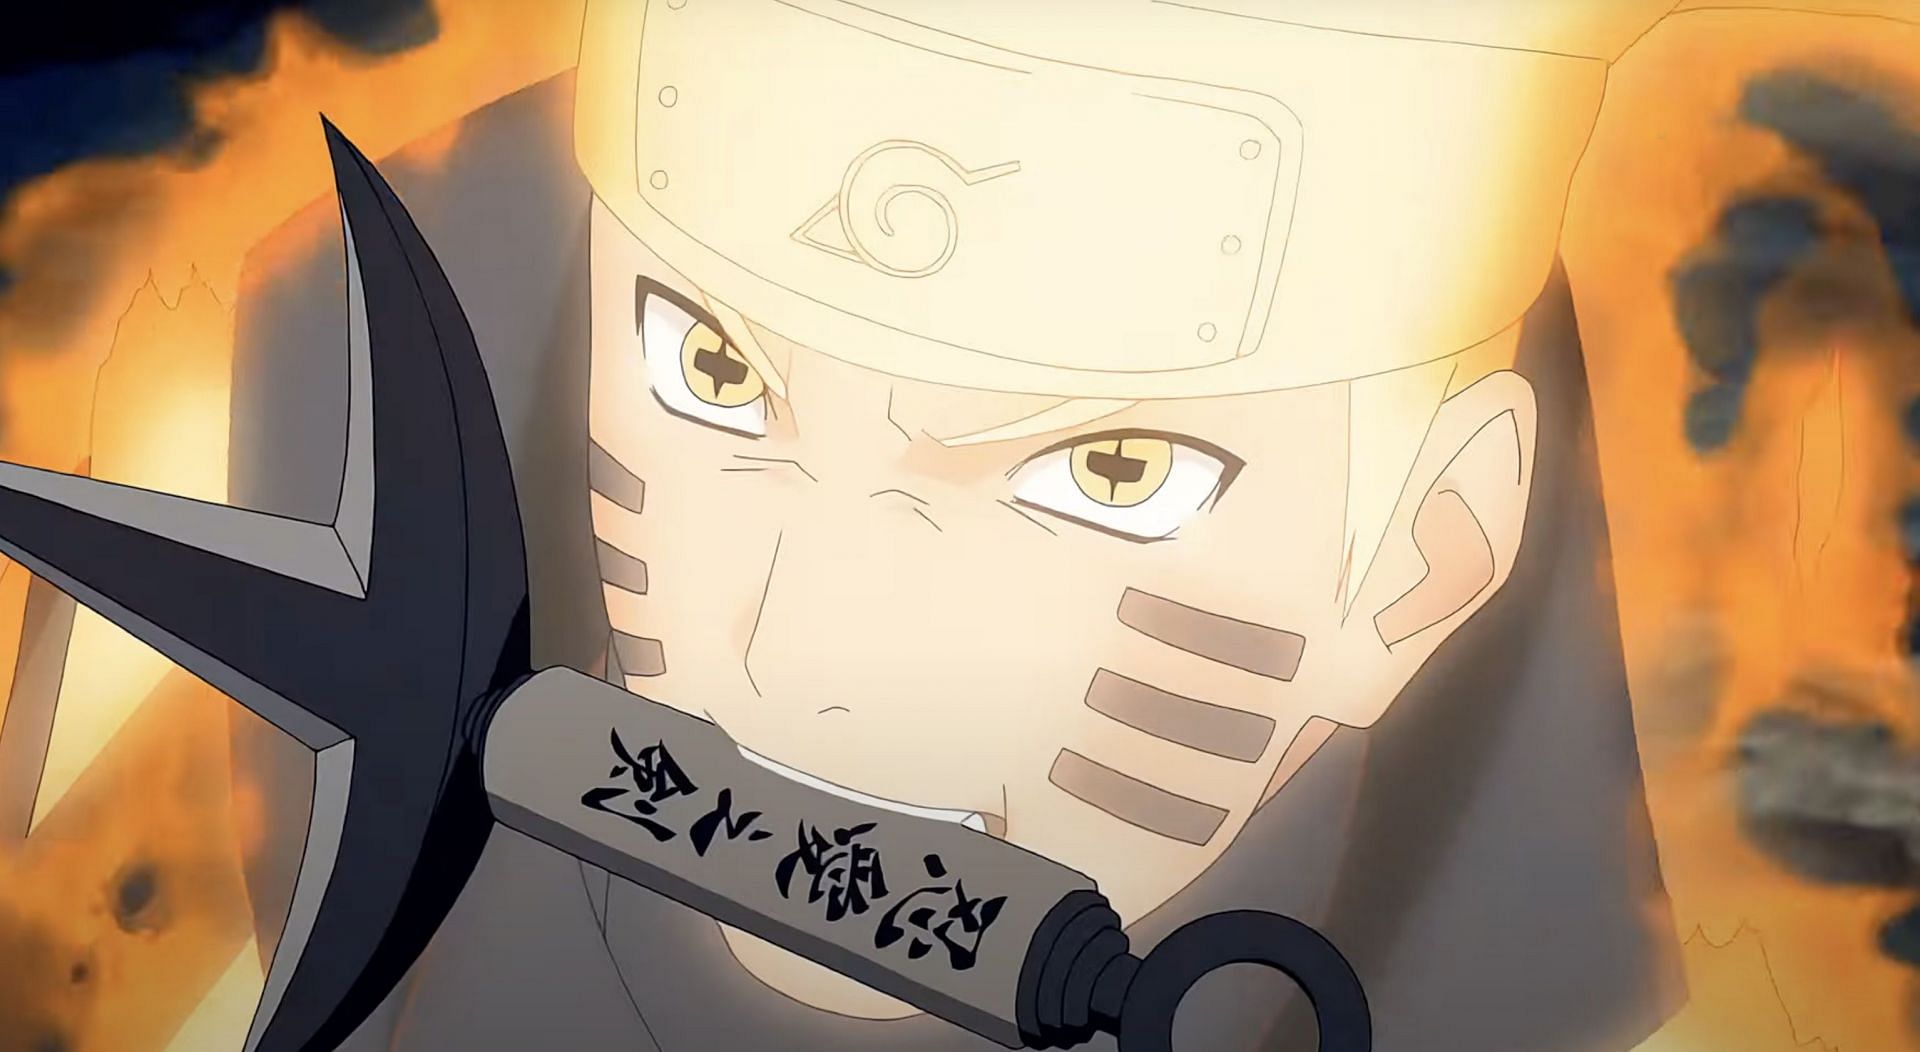 Naruto Uzumaki as seen in anime (Image via Studio Pierrot)